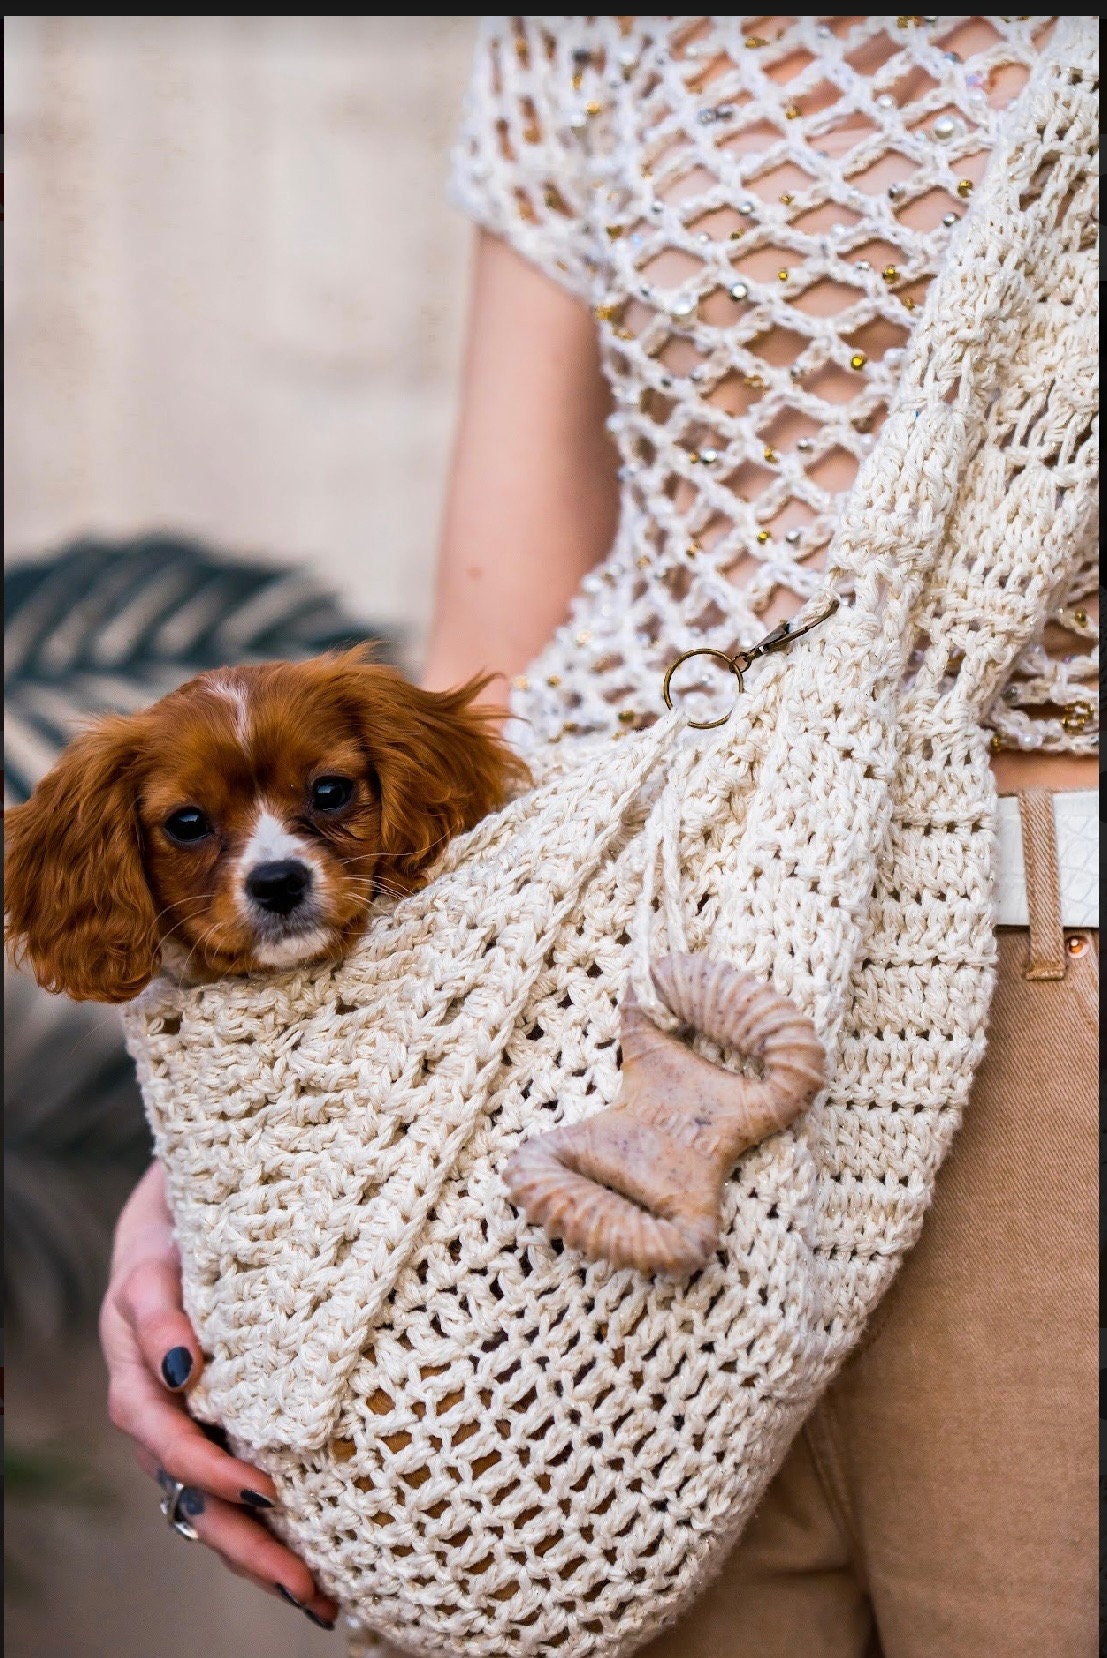 The Edith Hand-Made Crochet Dress — Namaste & Crochet Makers